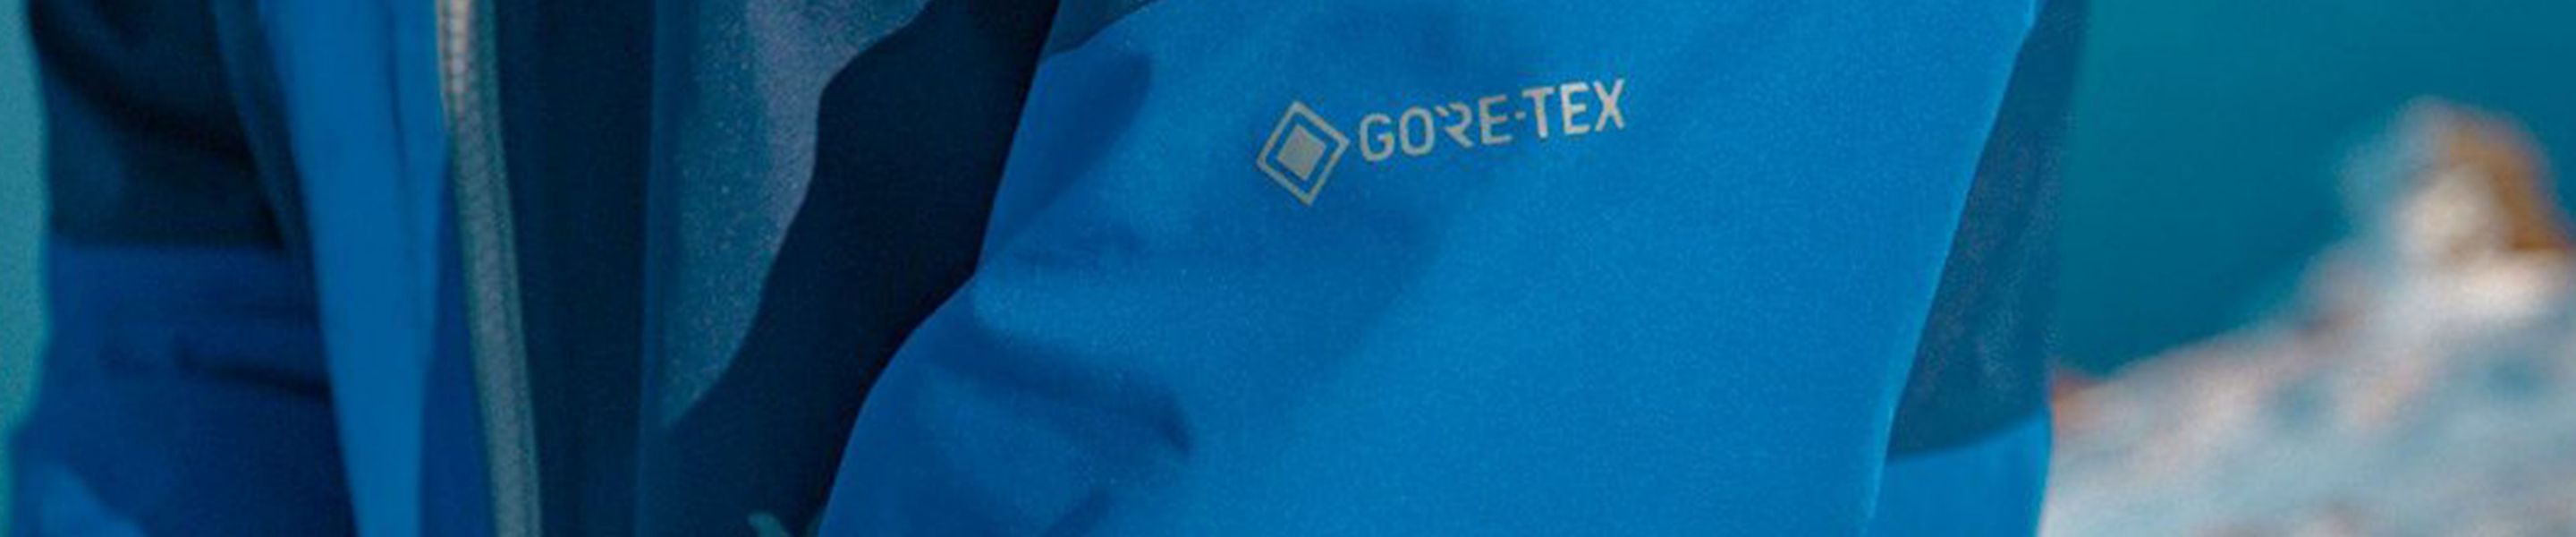 goretex slim jacket